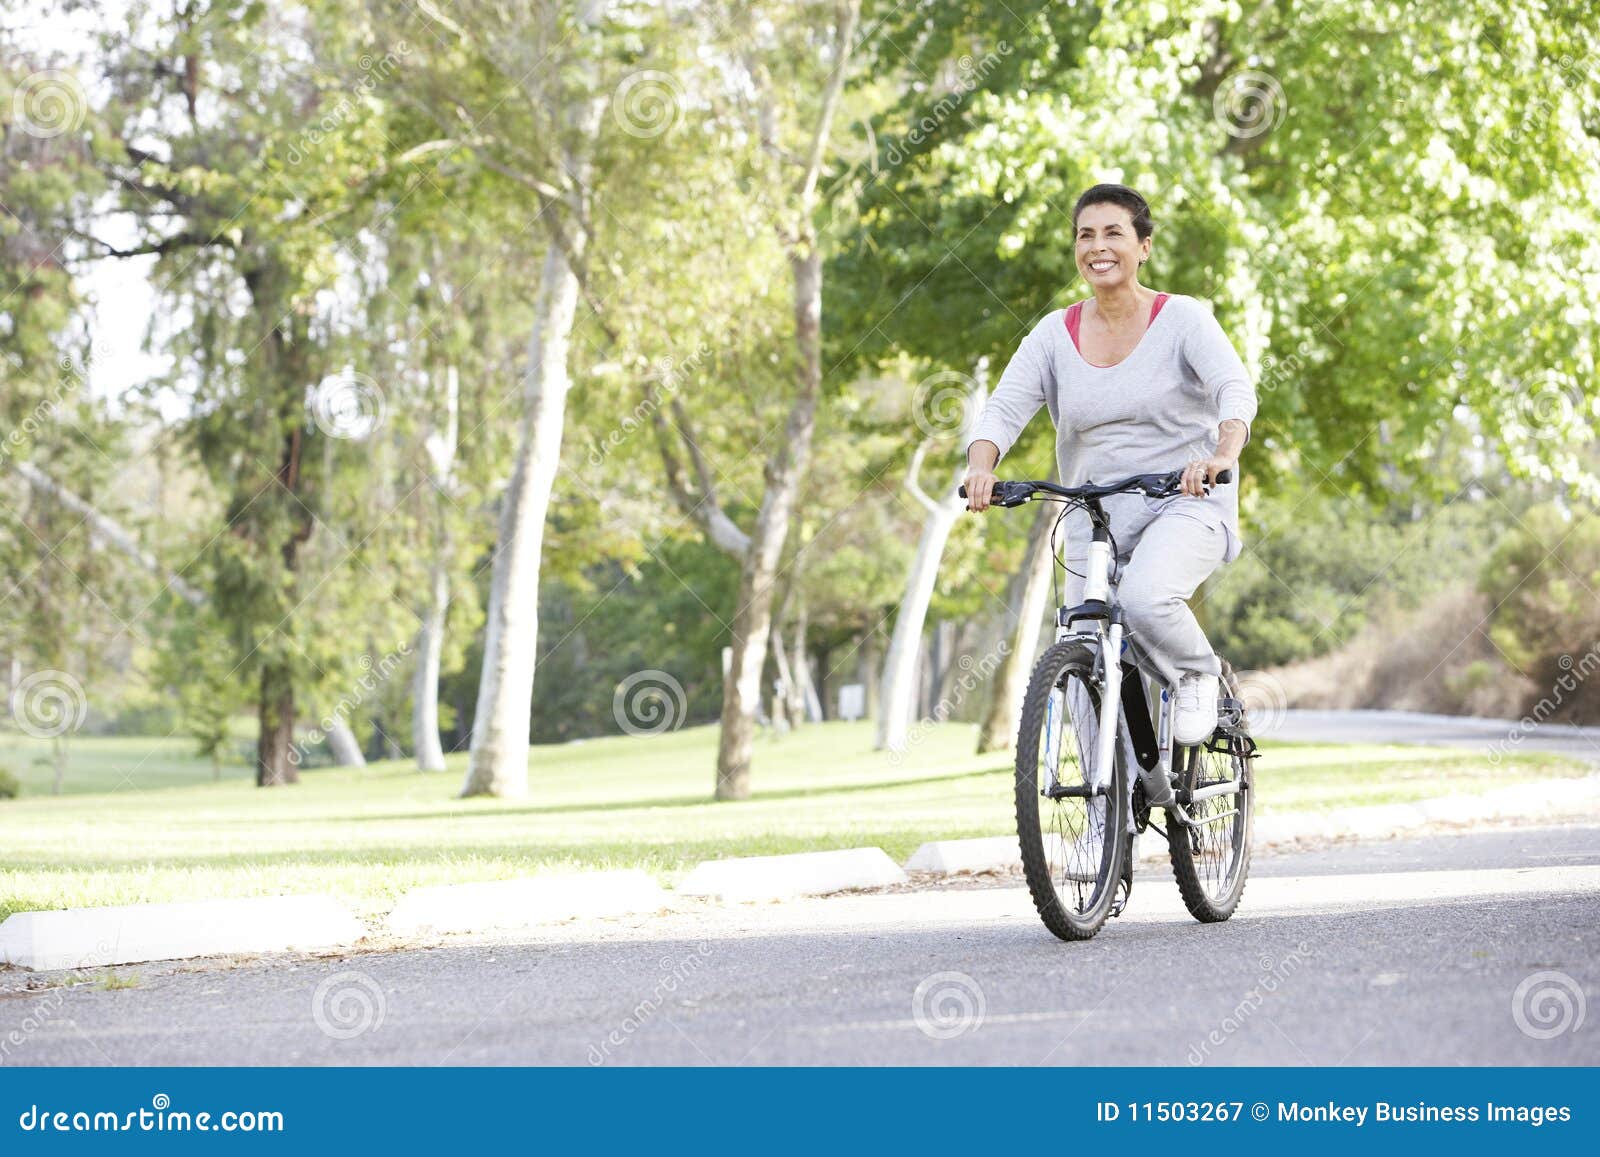 senior hispanic woman cycling in park